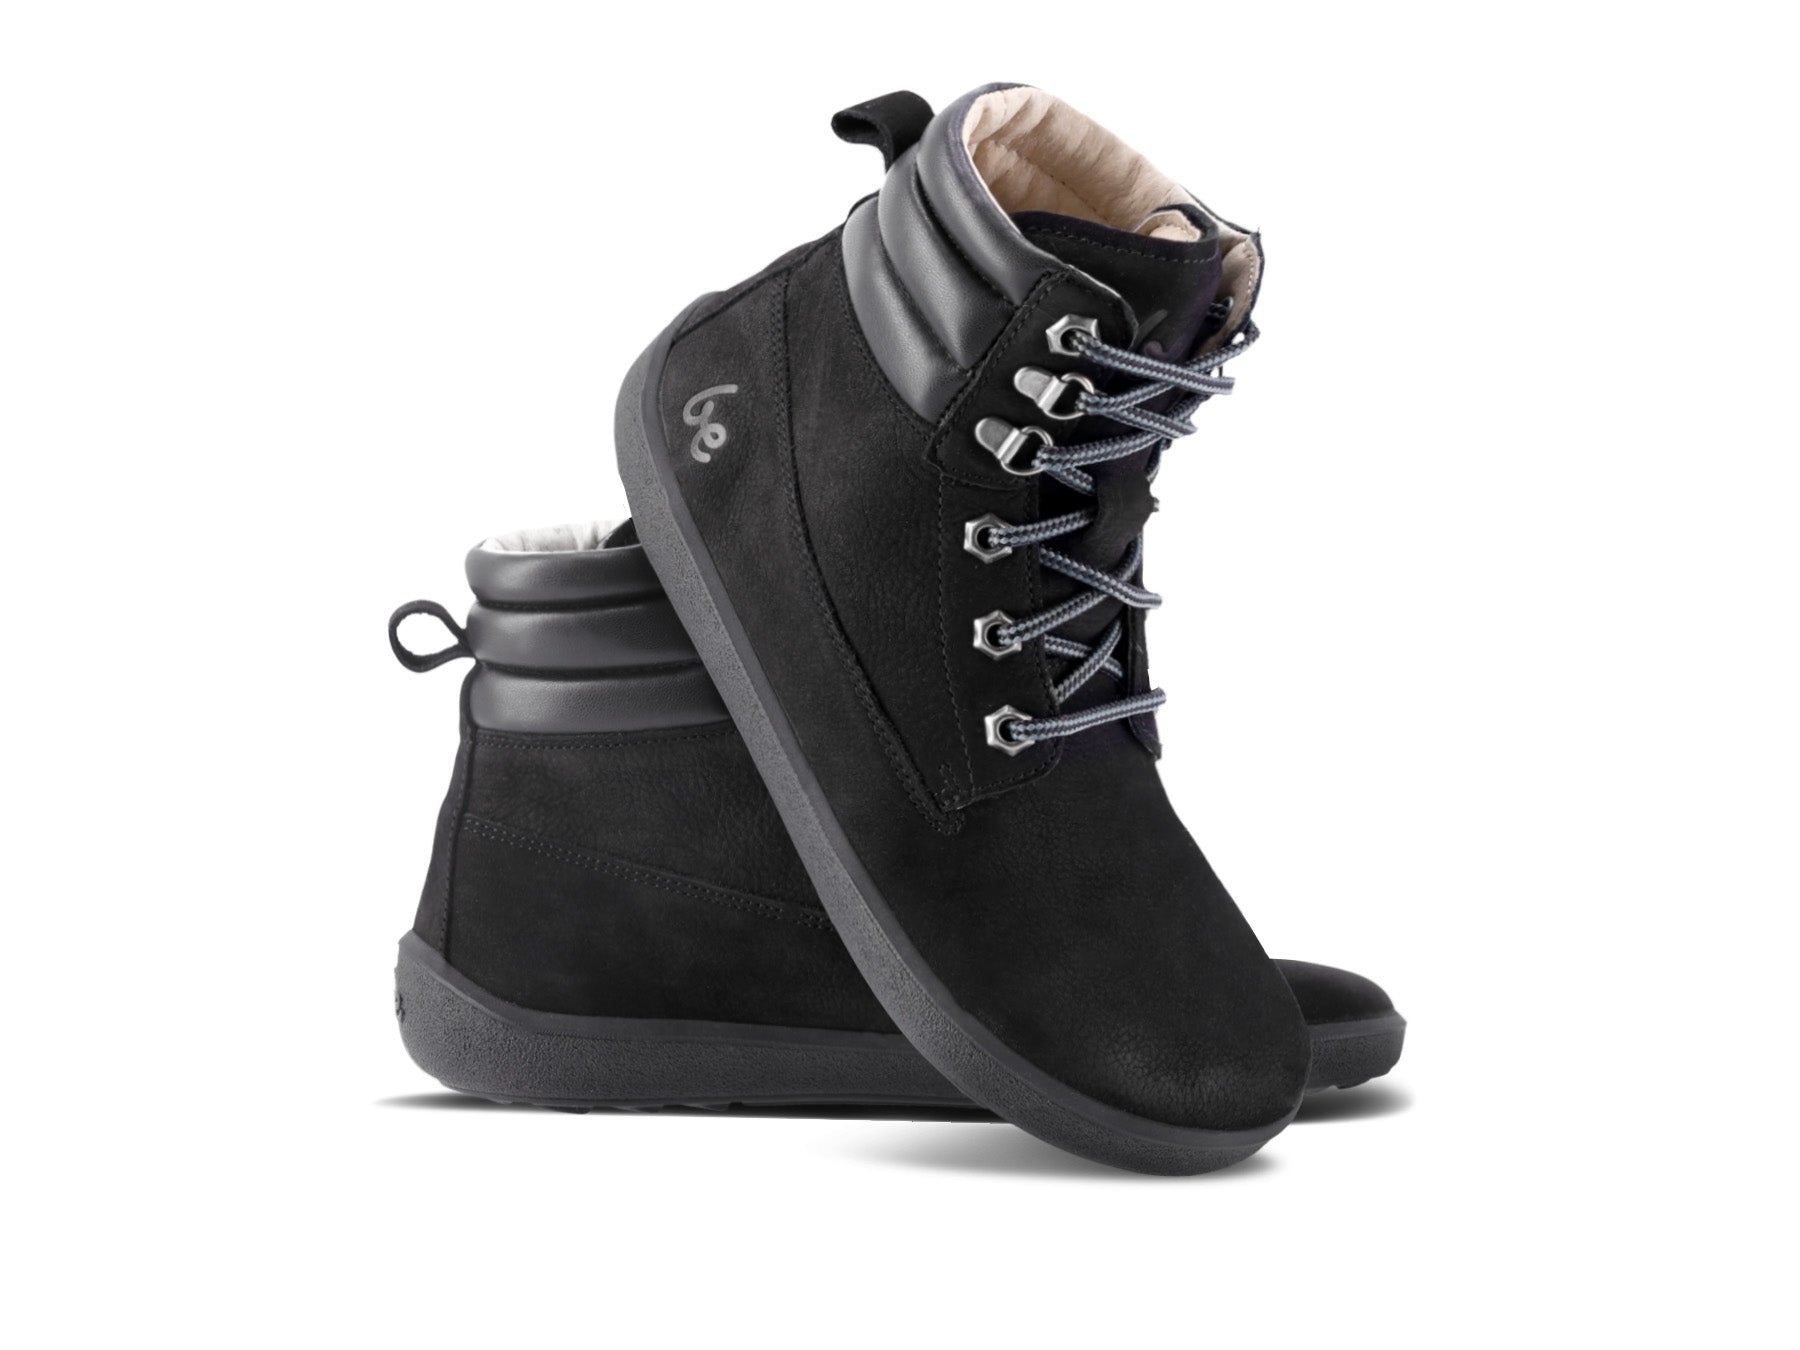 Barefoot Boots Be Lenka Nevada Neo - All Black 2 OzBarefoot Australia